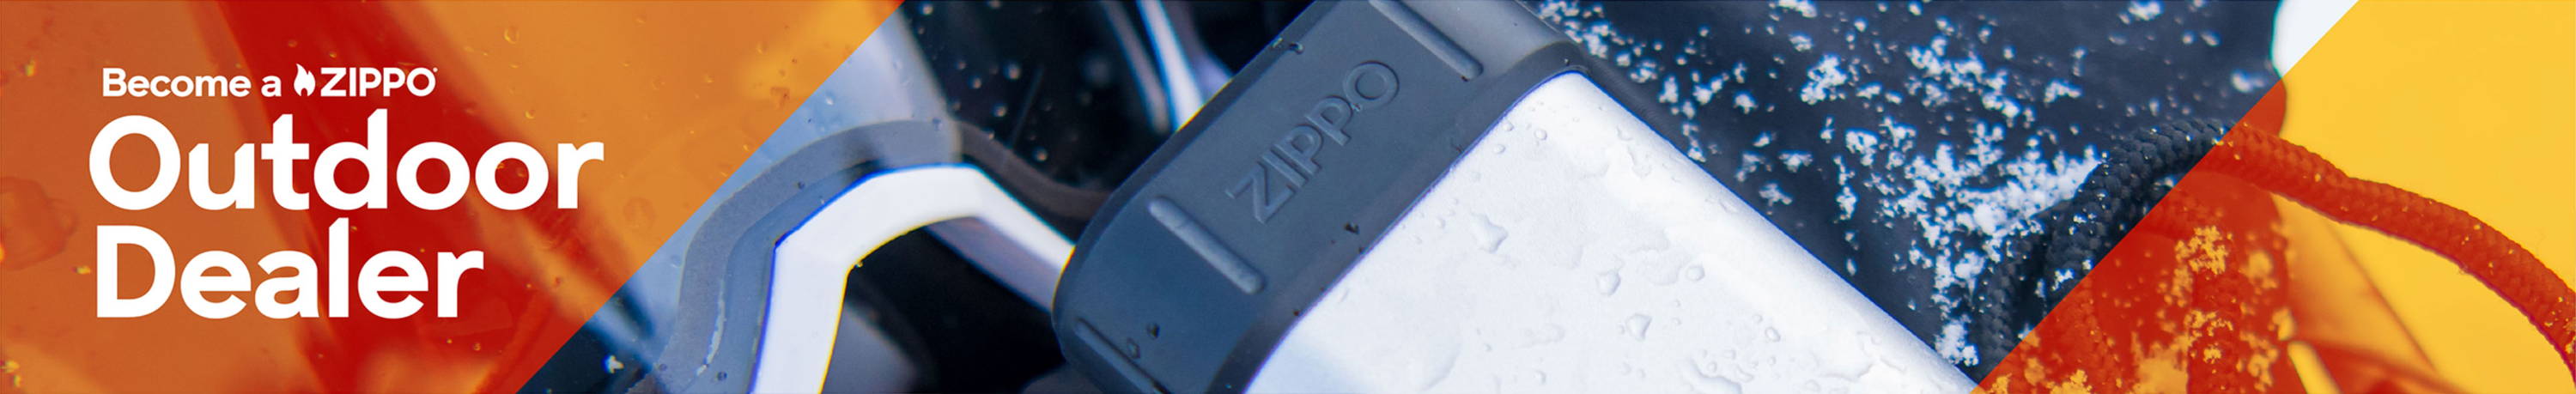 Become a Zippo Outdoor Dealer